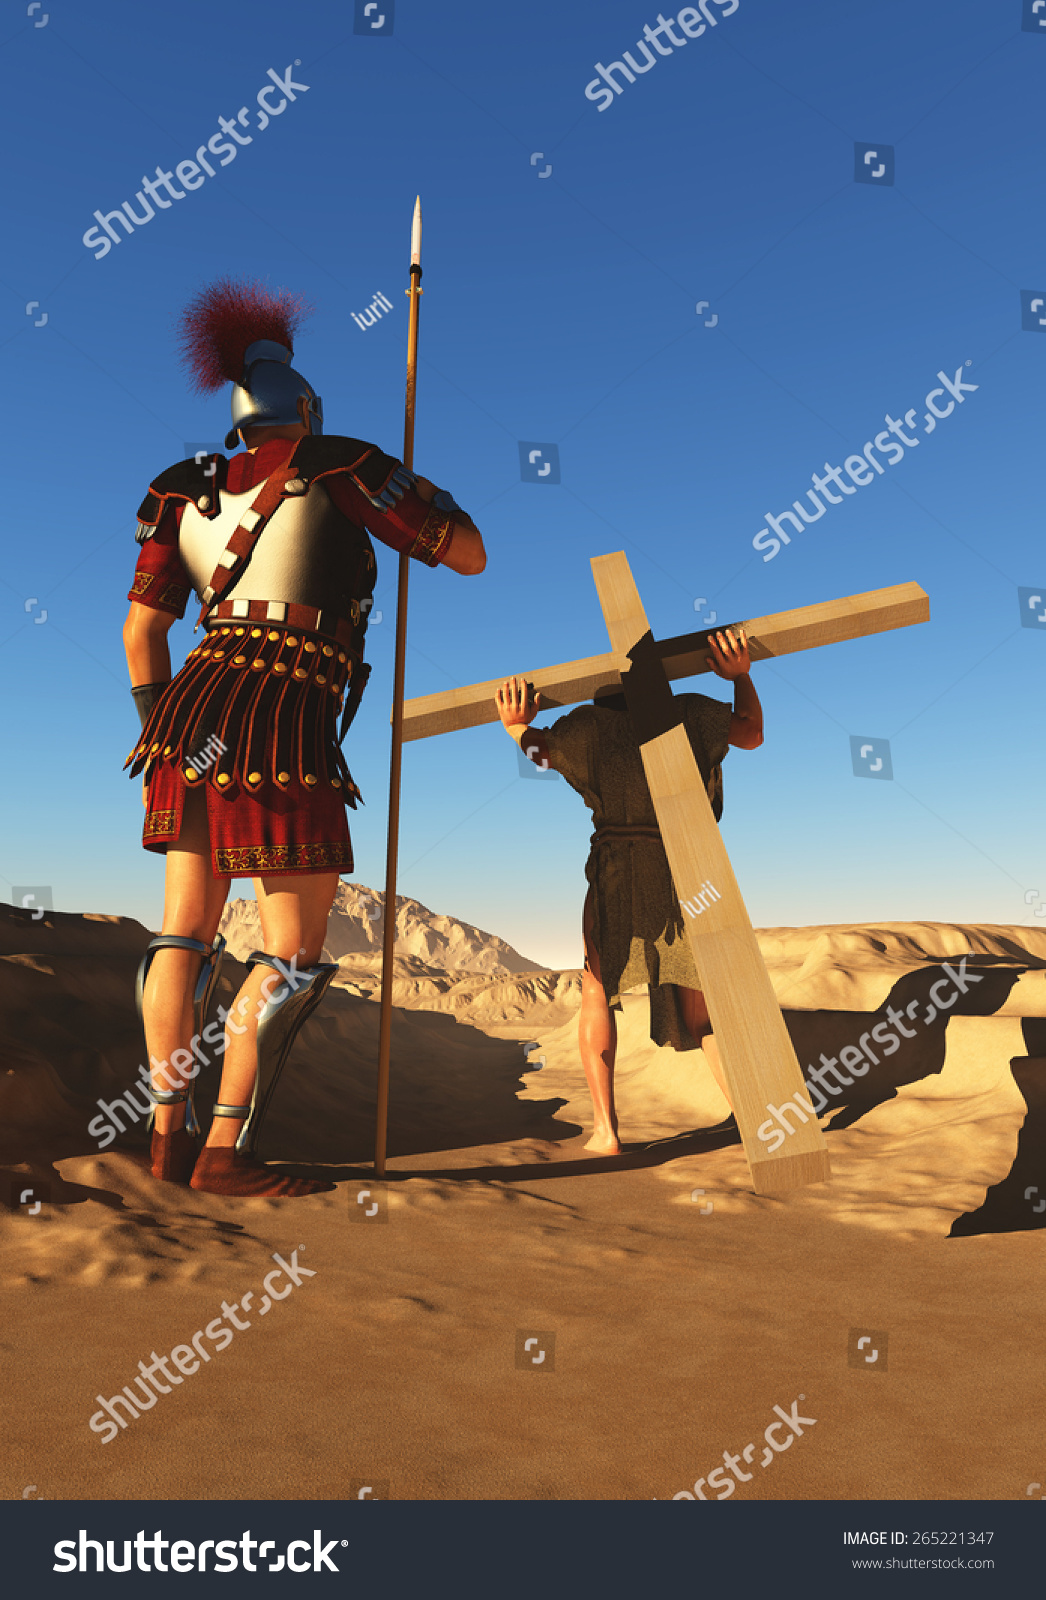 crucified-jesus-soldiers-265221347-shutterstock